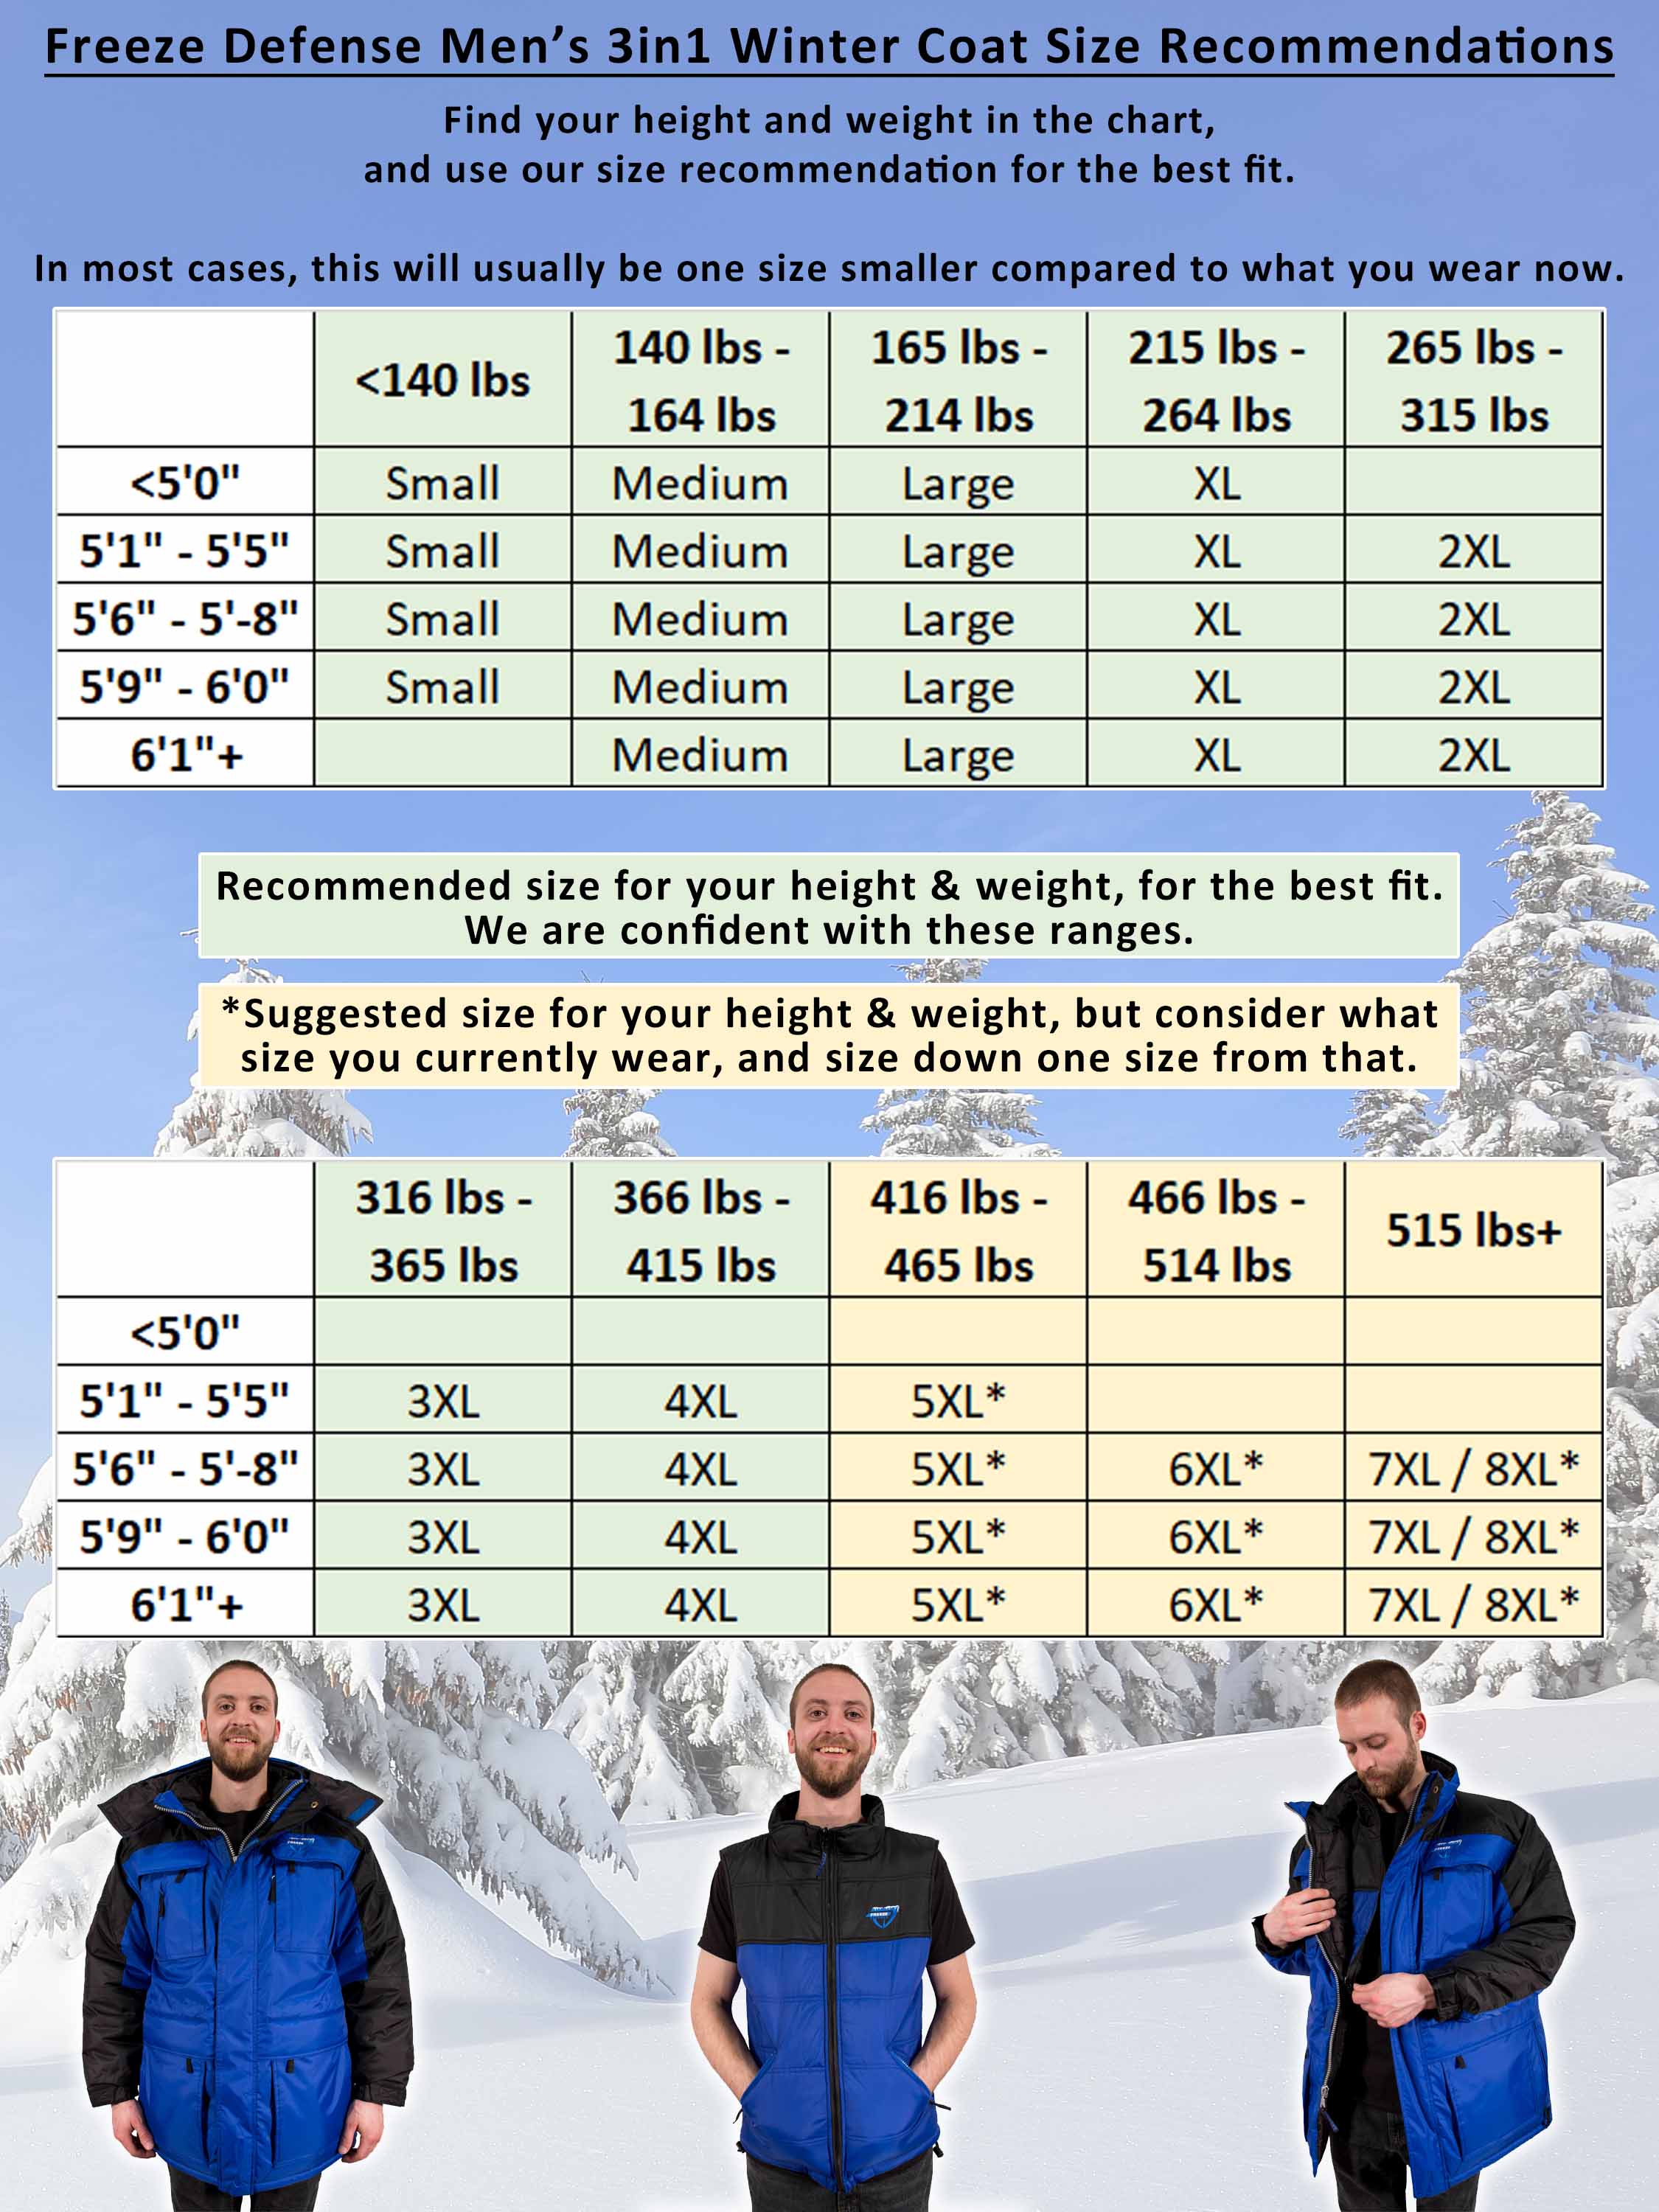 https://www.freezedefense.net/images/freeze-defense-3in1-winter-coat/freeze-defense-3in1-coat-size-chart.jpg